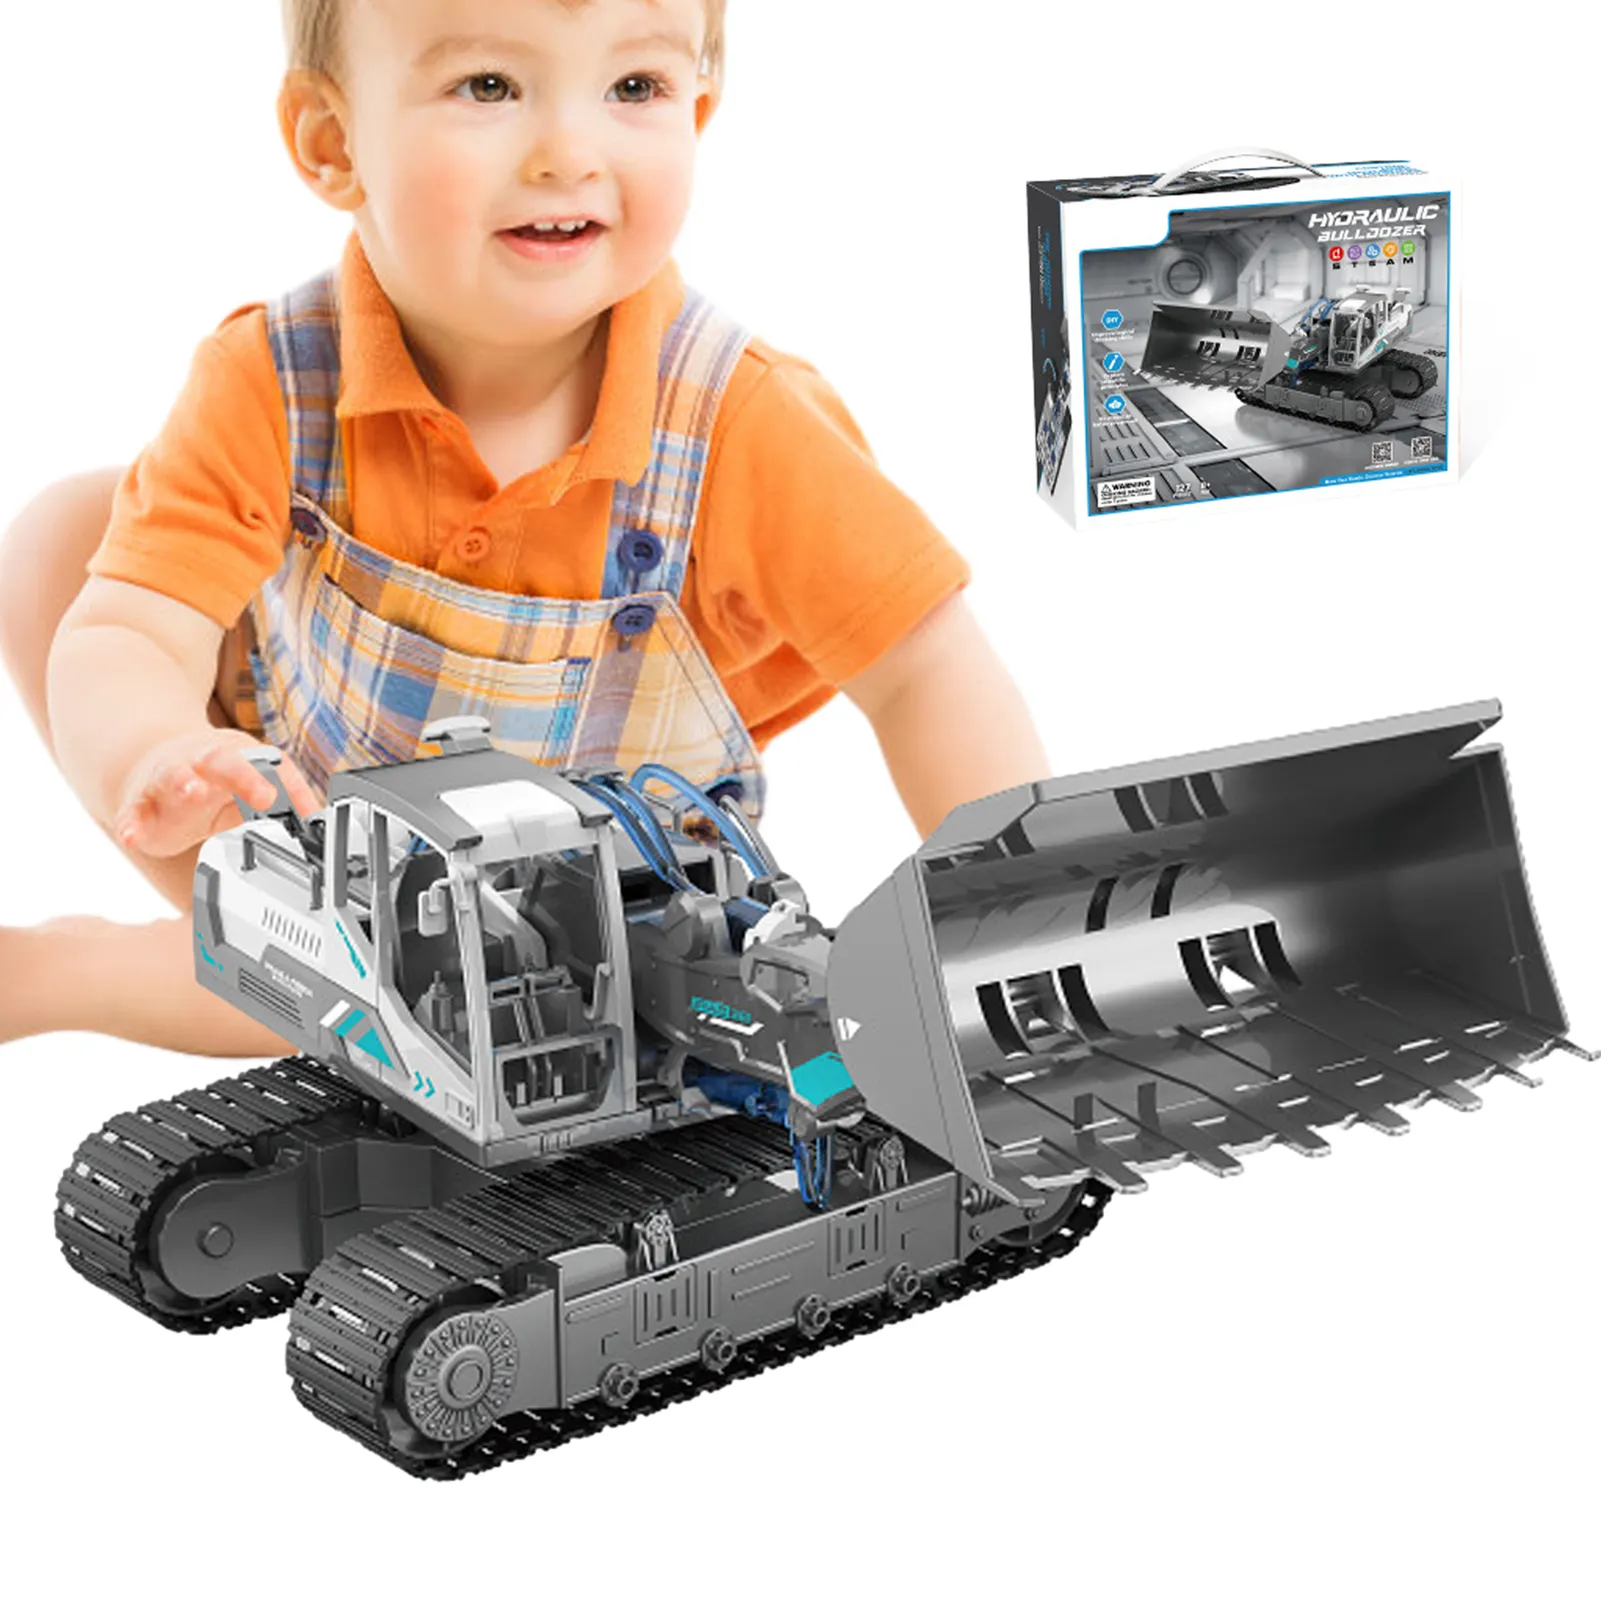 Batang DIY merakit sendiri blok untuk anak-anak menarik kembali truk ekskavator mainan tanpa listrik hidrolik bulldoser Power hadiah